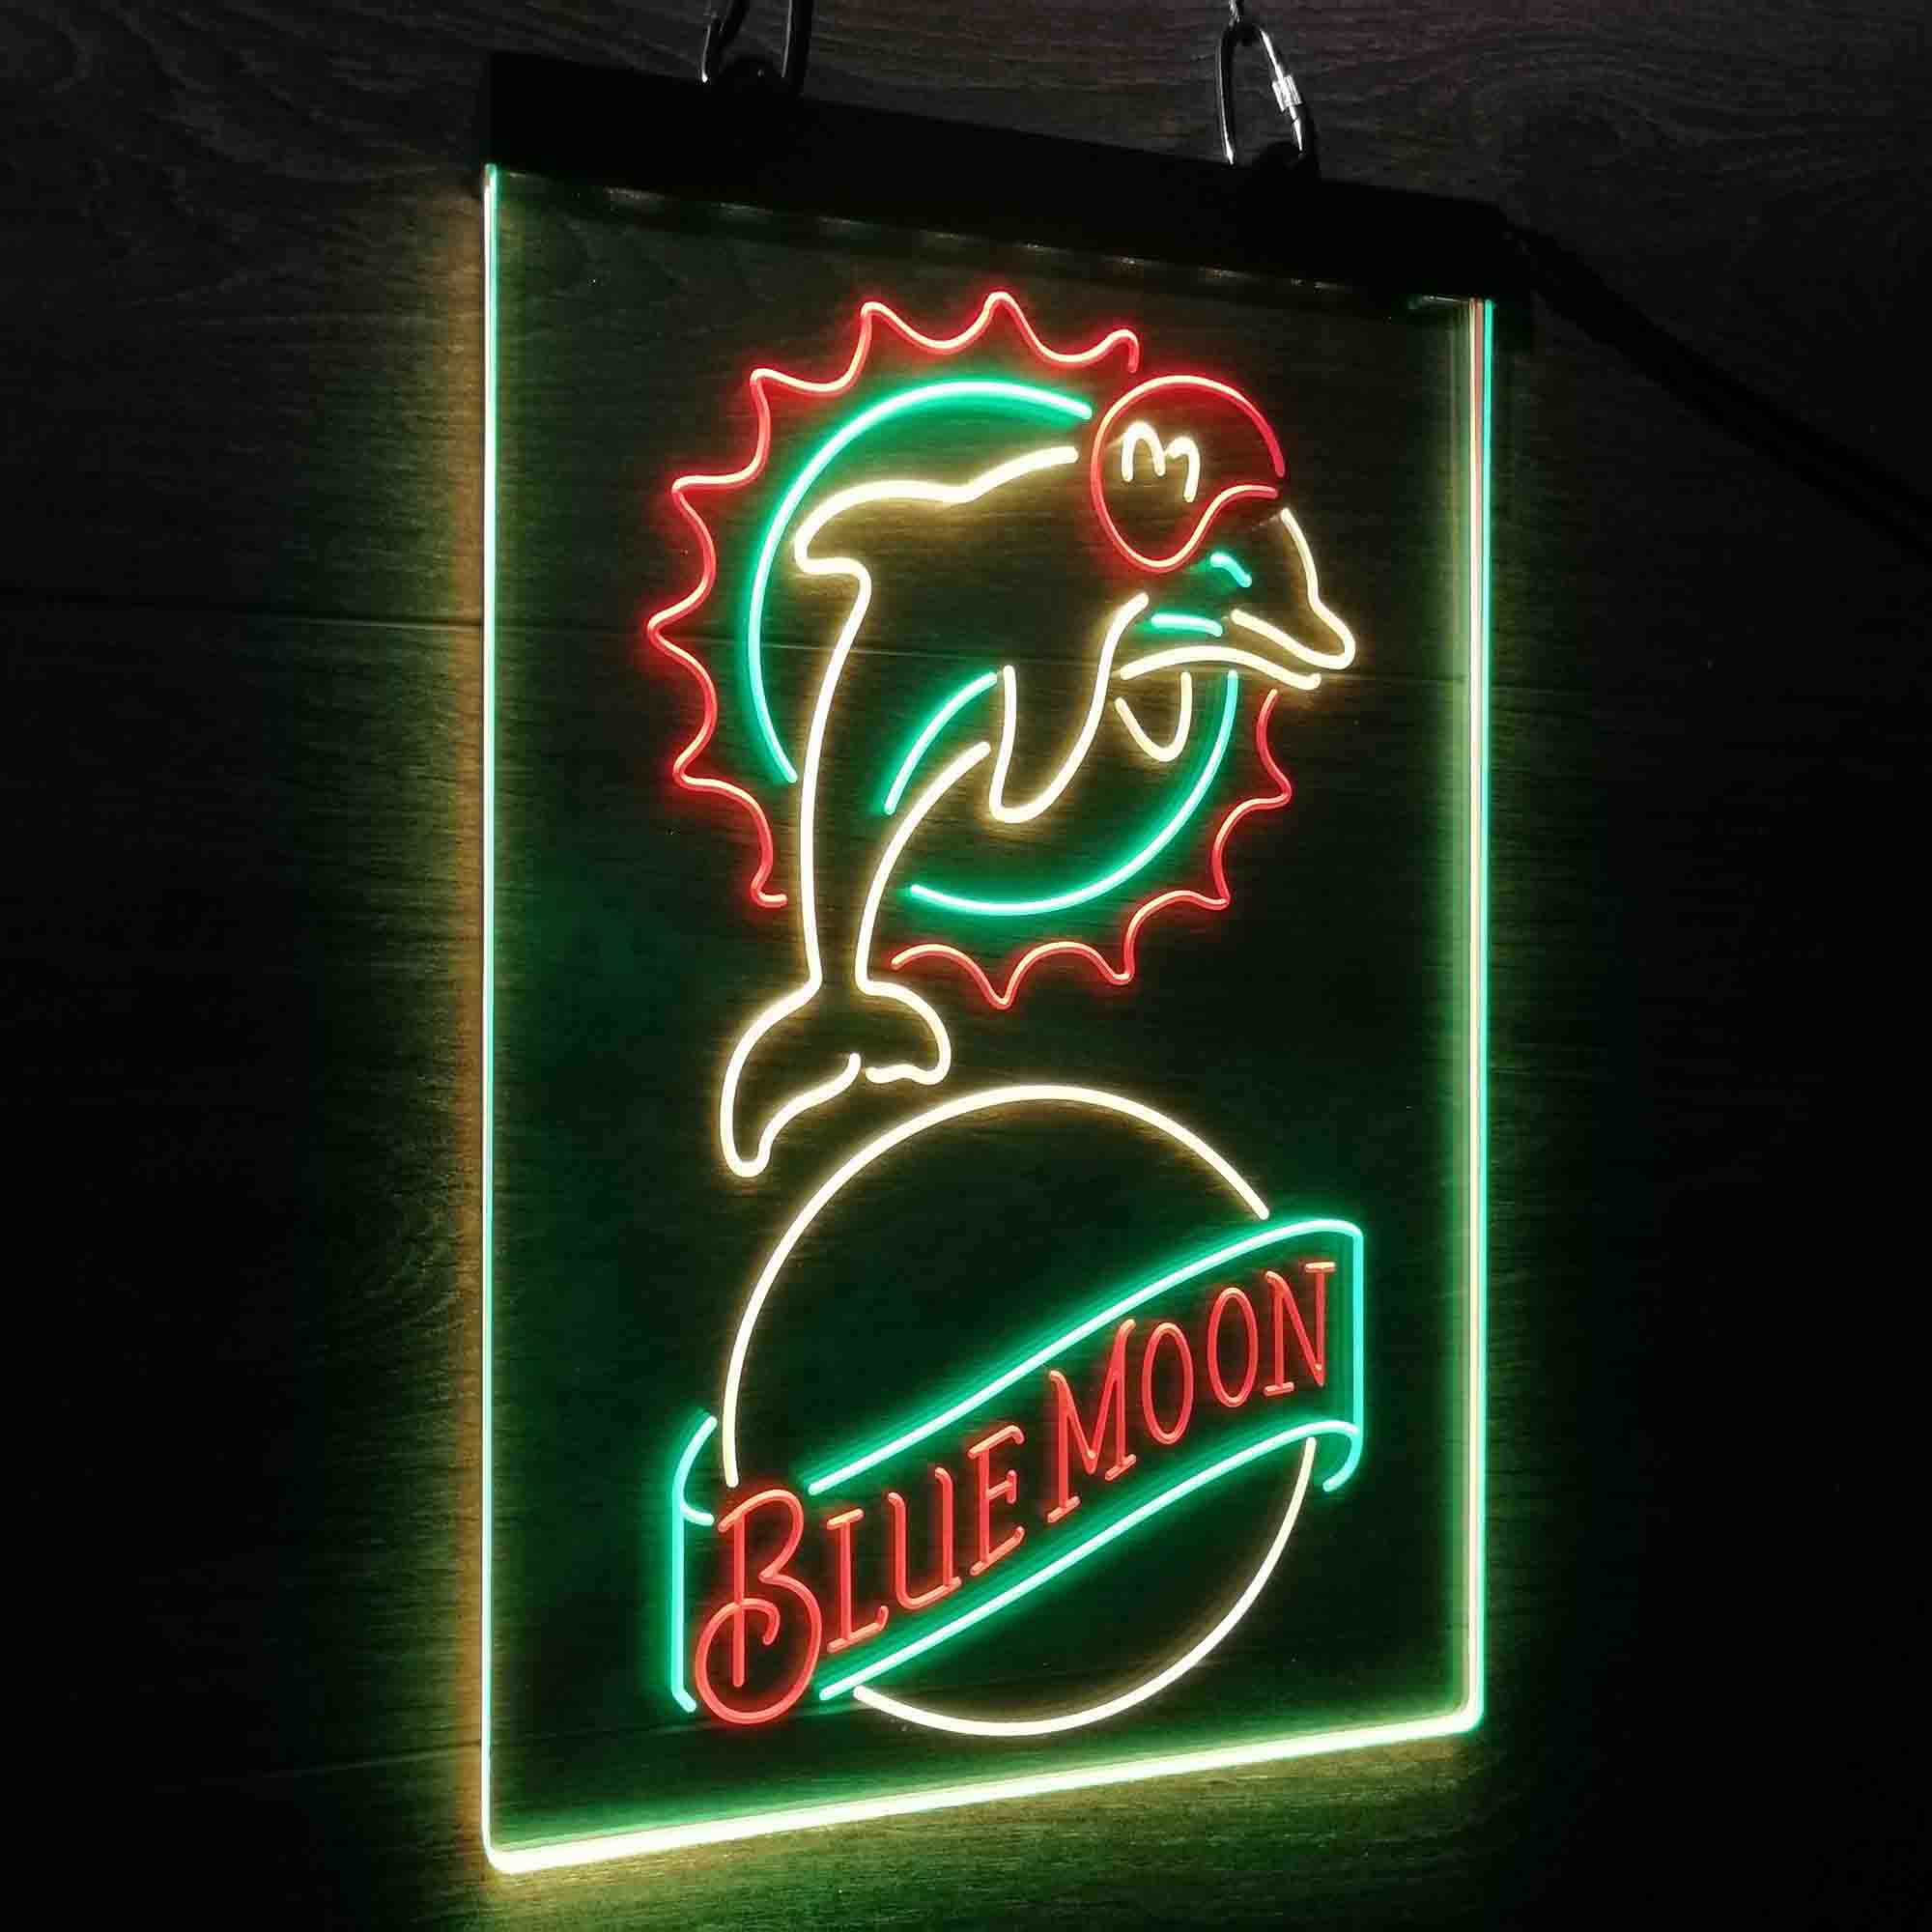 Blue Moon Bar Miami Dolphins Est. 1966 Neon LED Sign 3 Colors